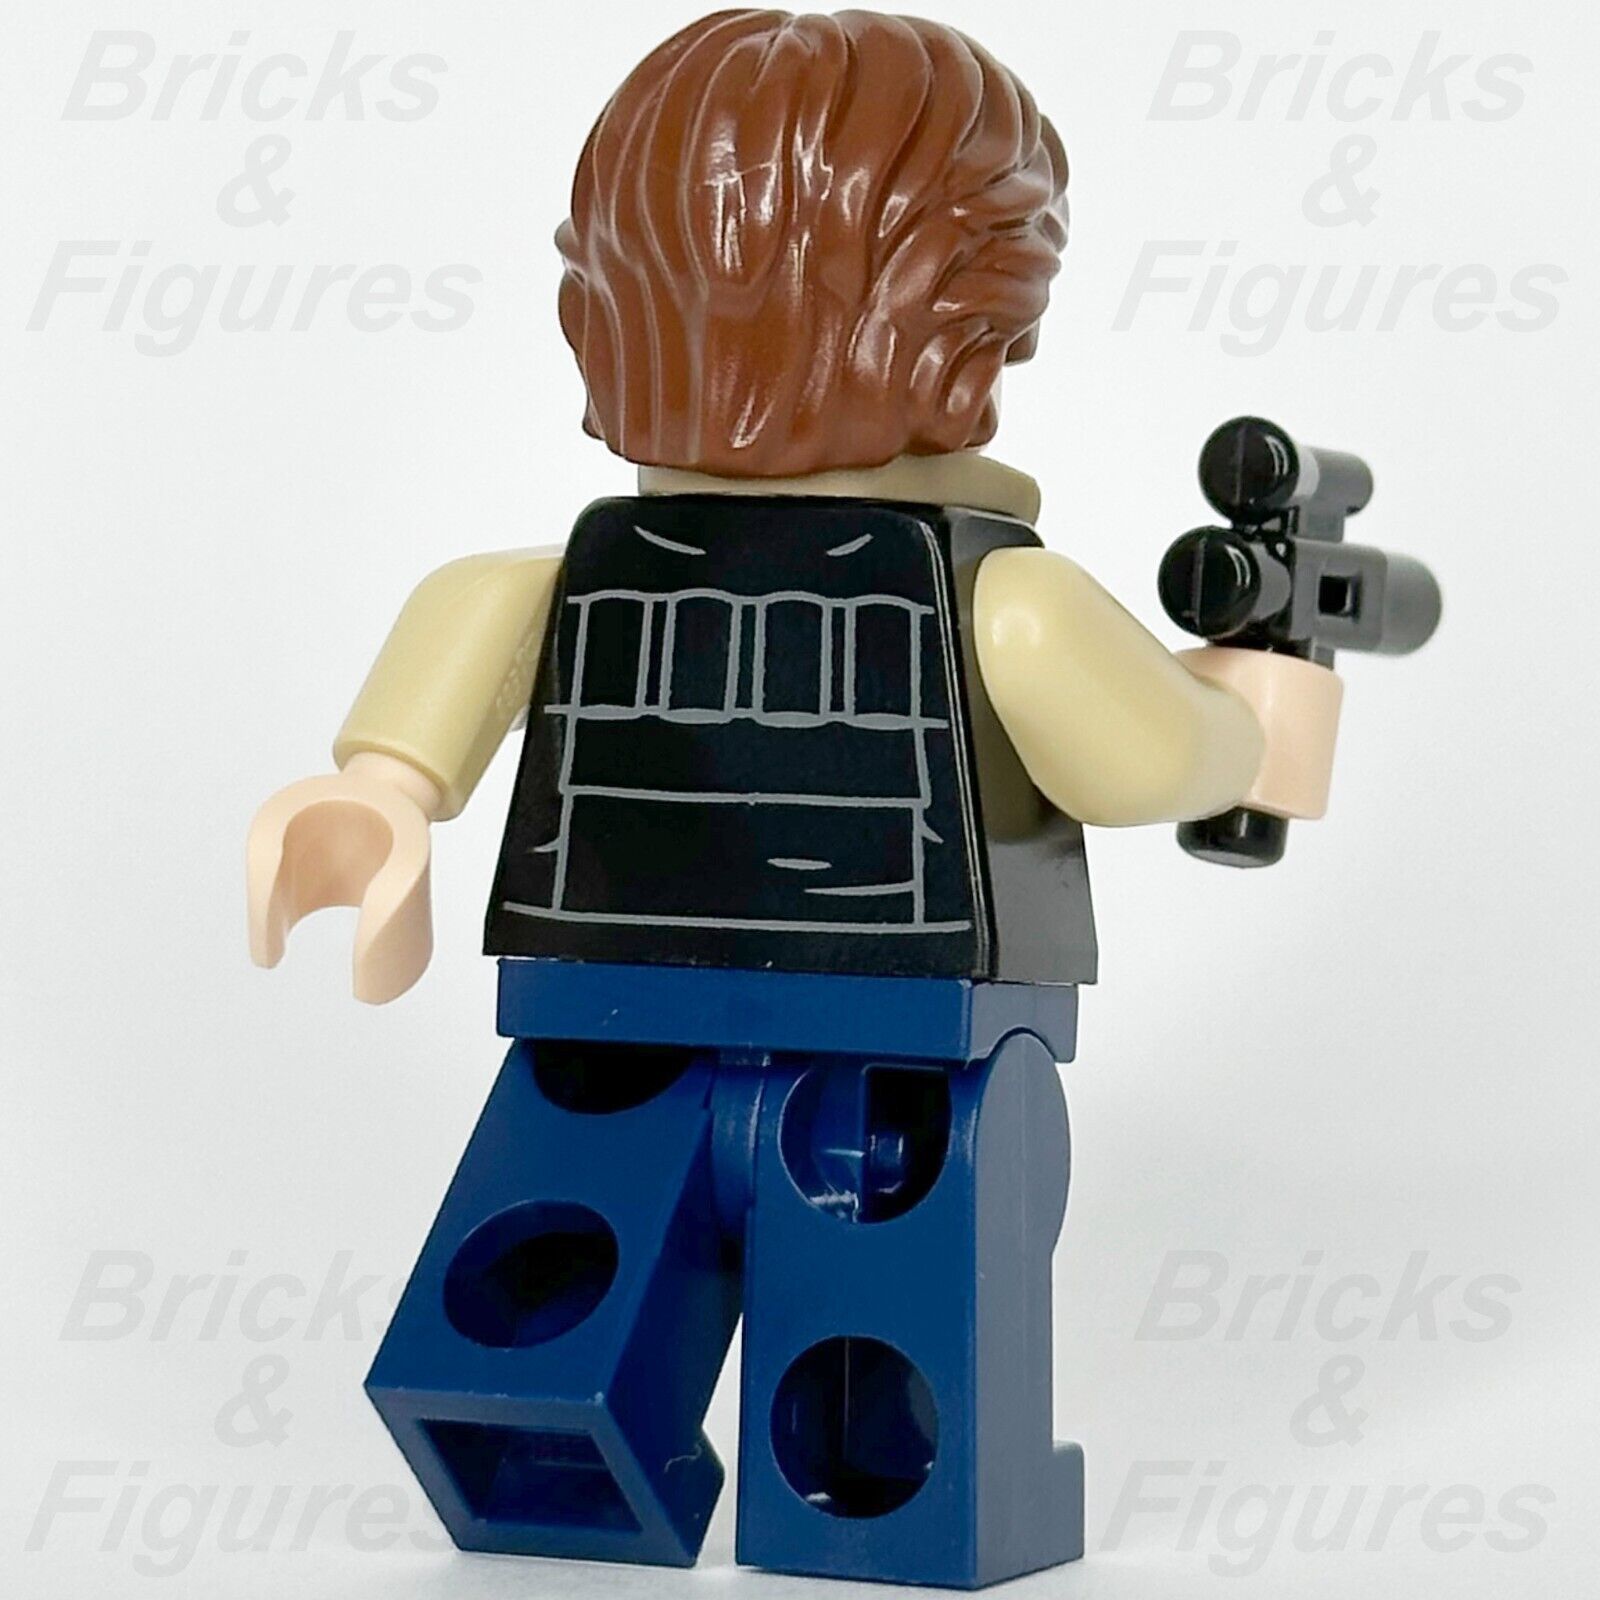 LEGO Star Wars Han Solo Minifigure Celebration Medal A New Hope 75365 sw1284